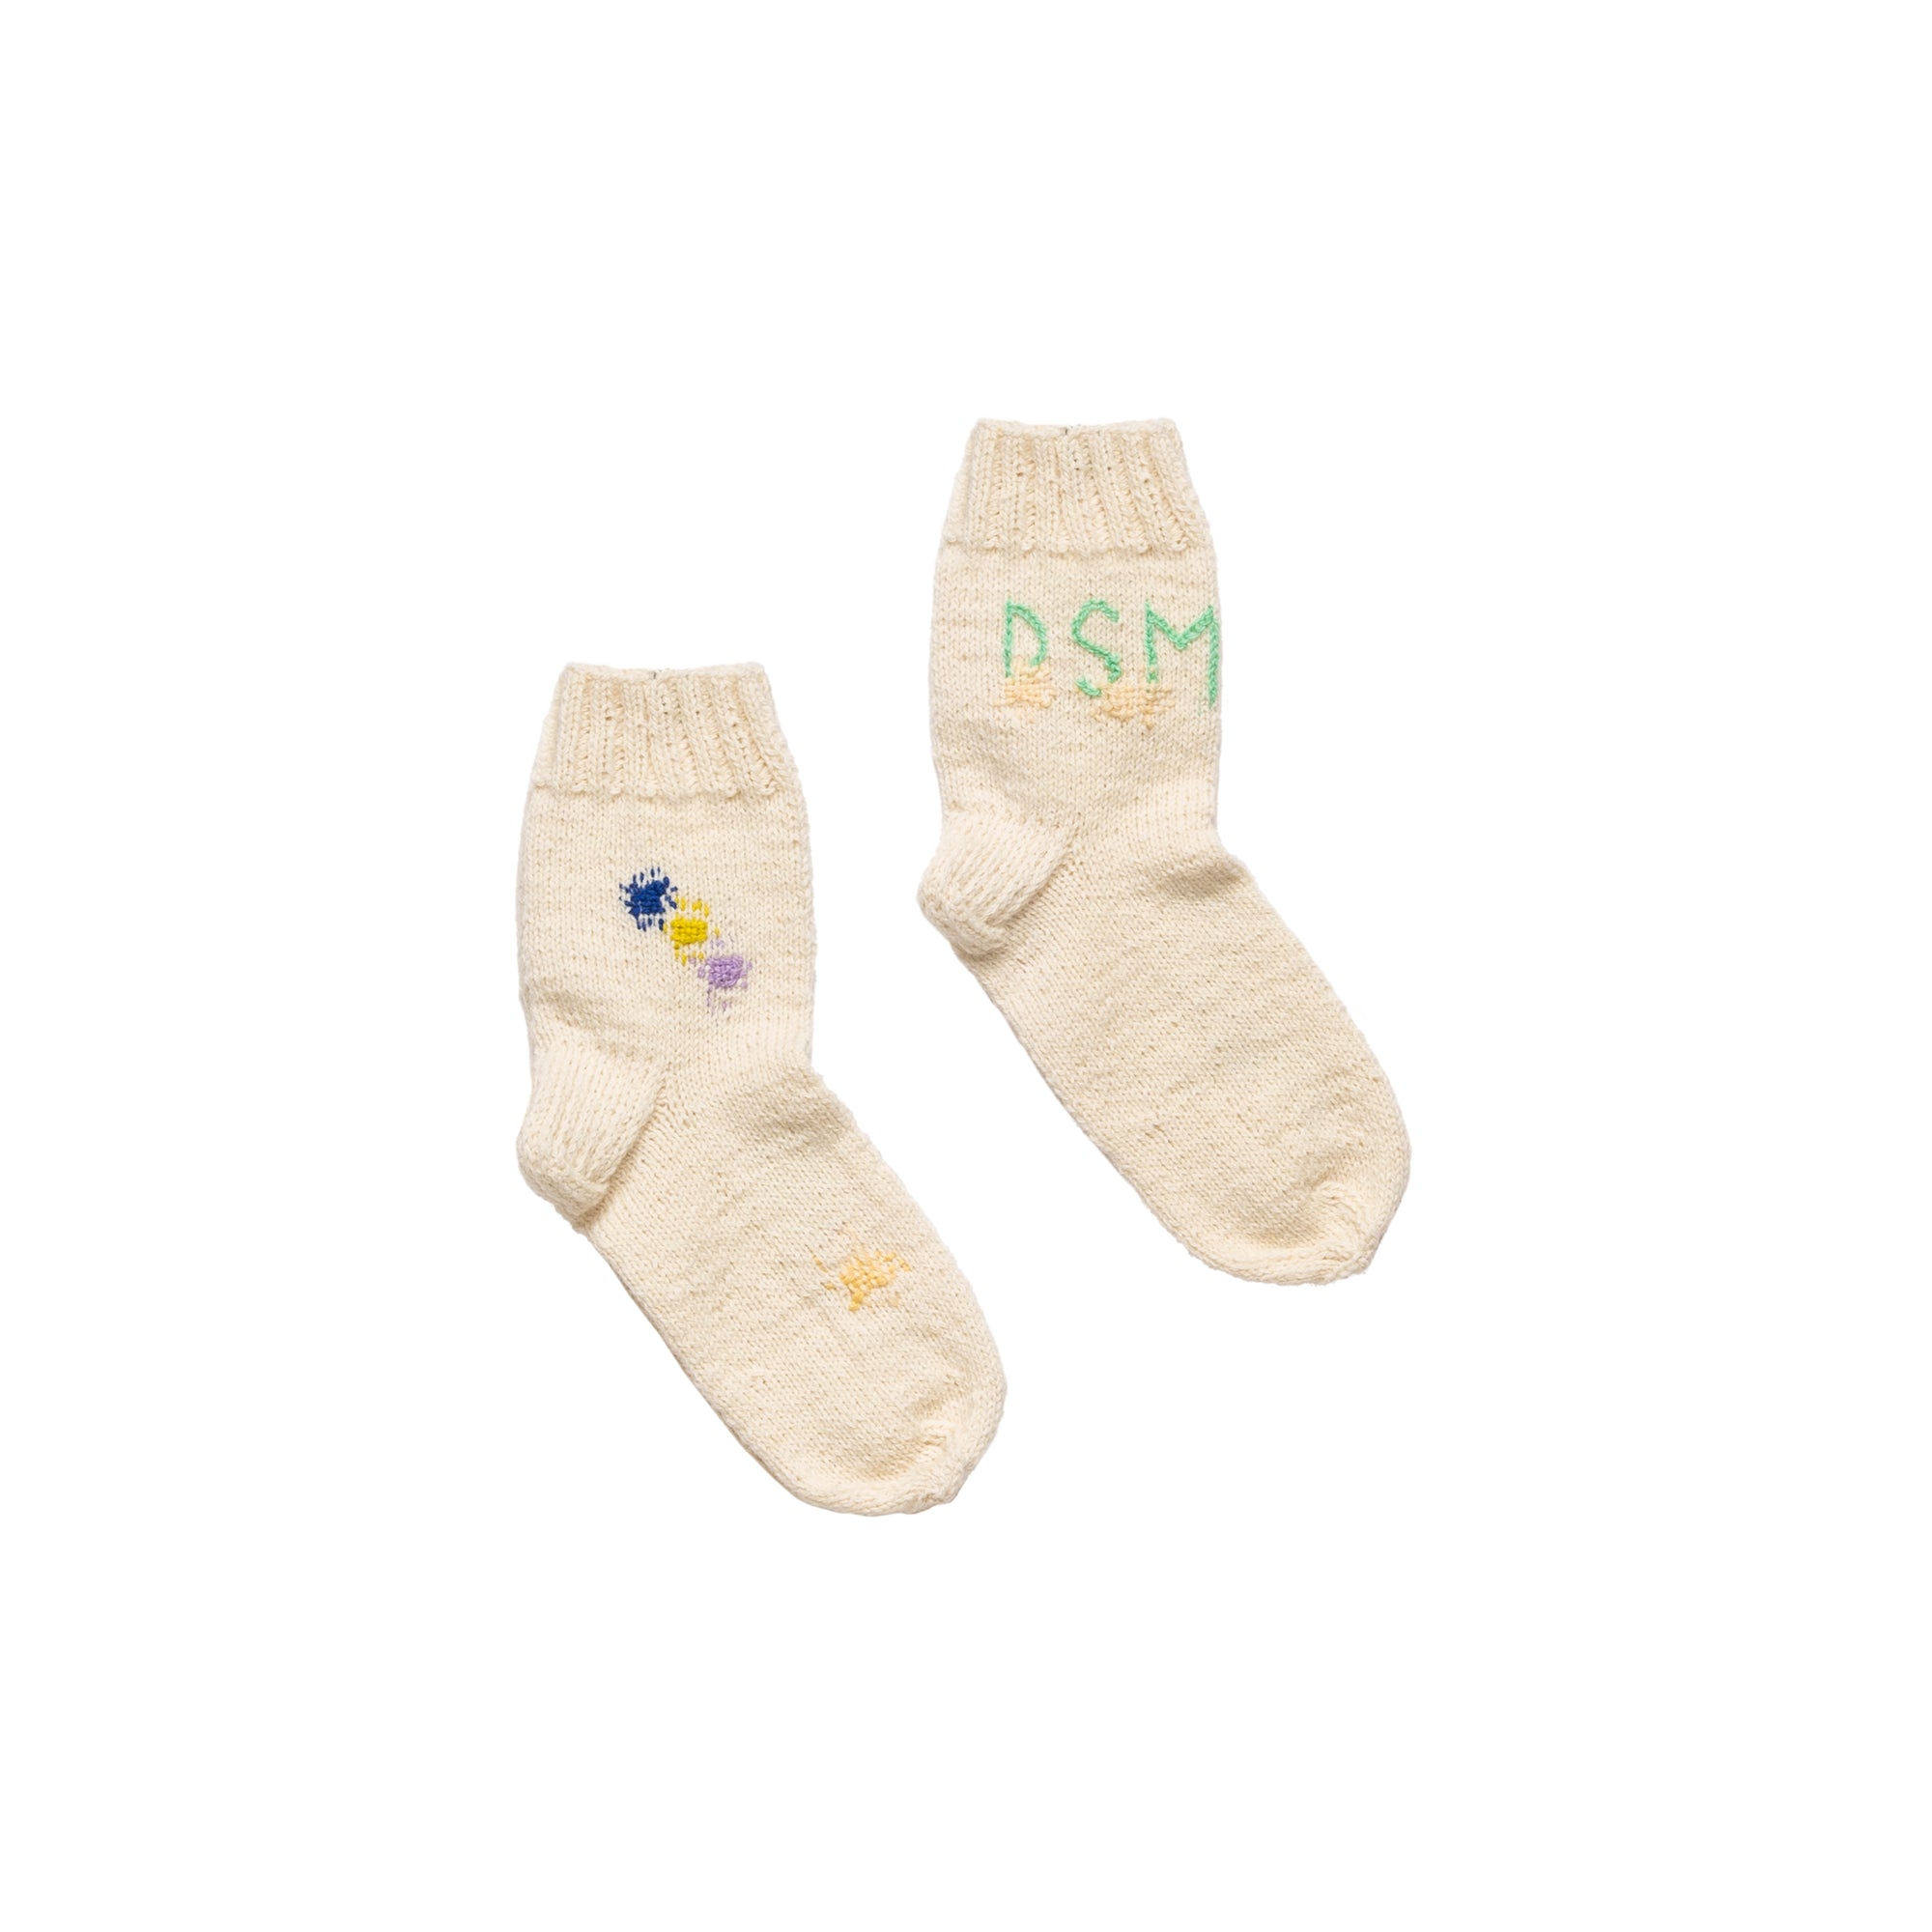 CASEY CASEY - DSM SP Socks - (Ivory) view 2